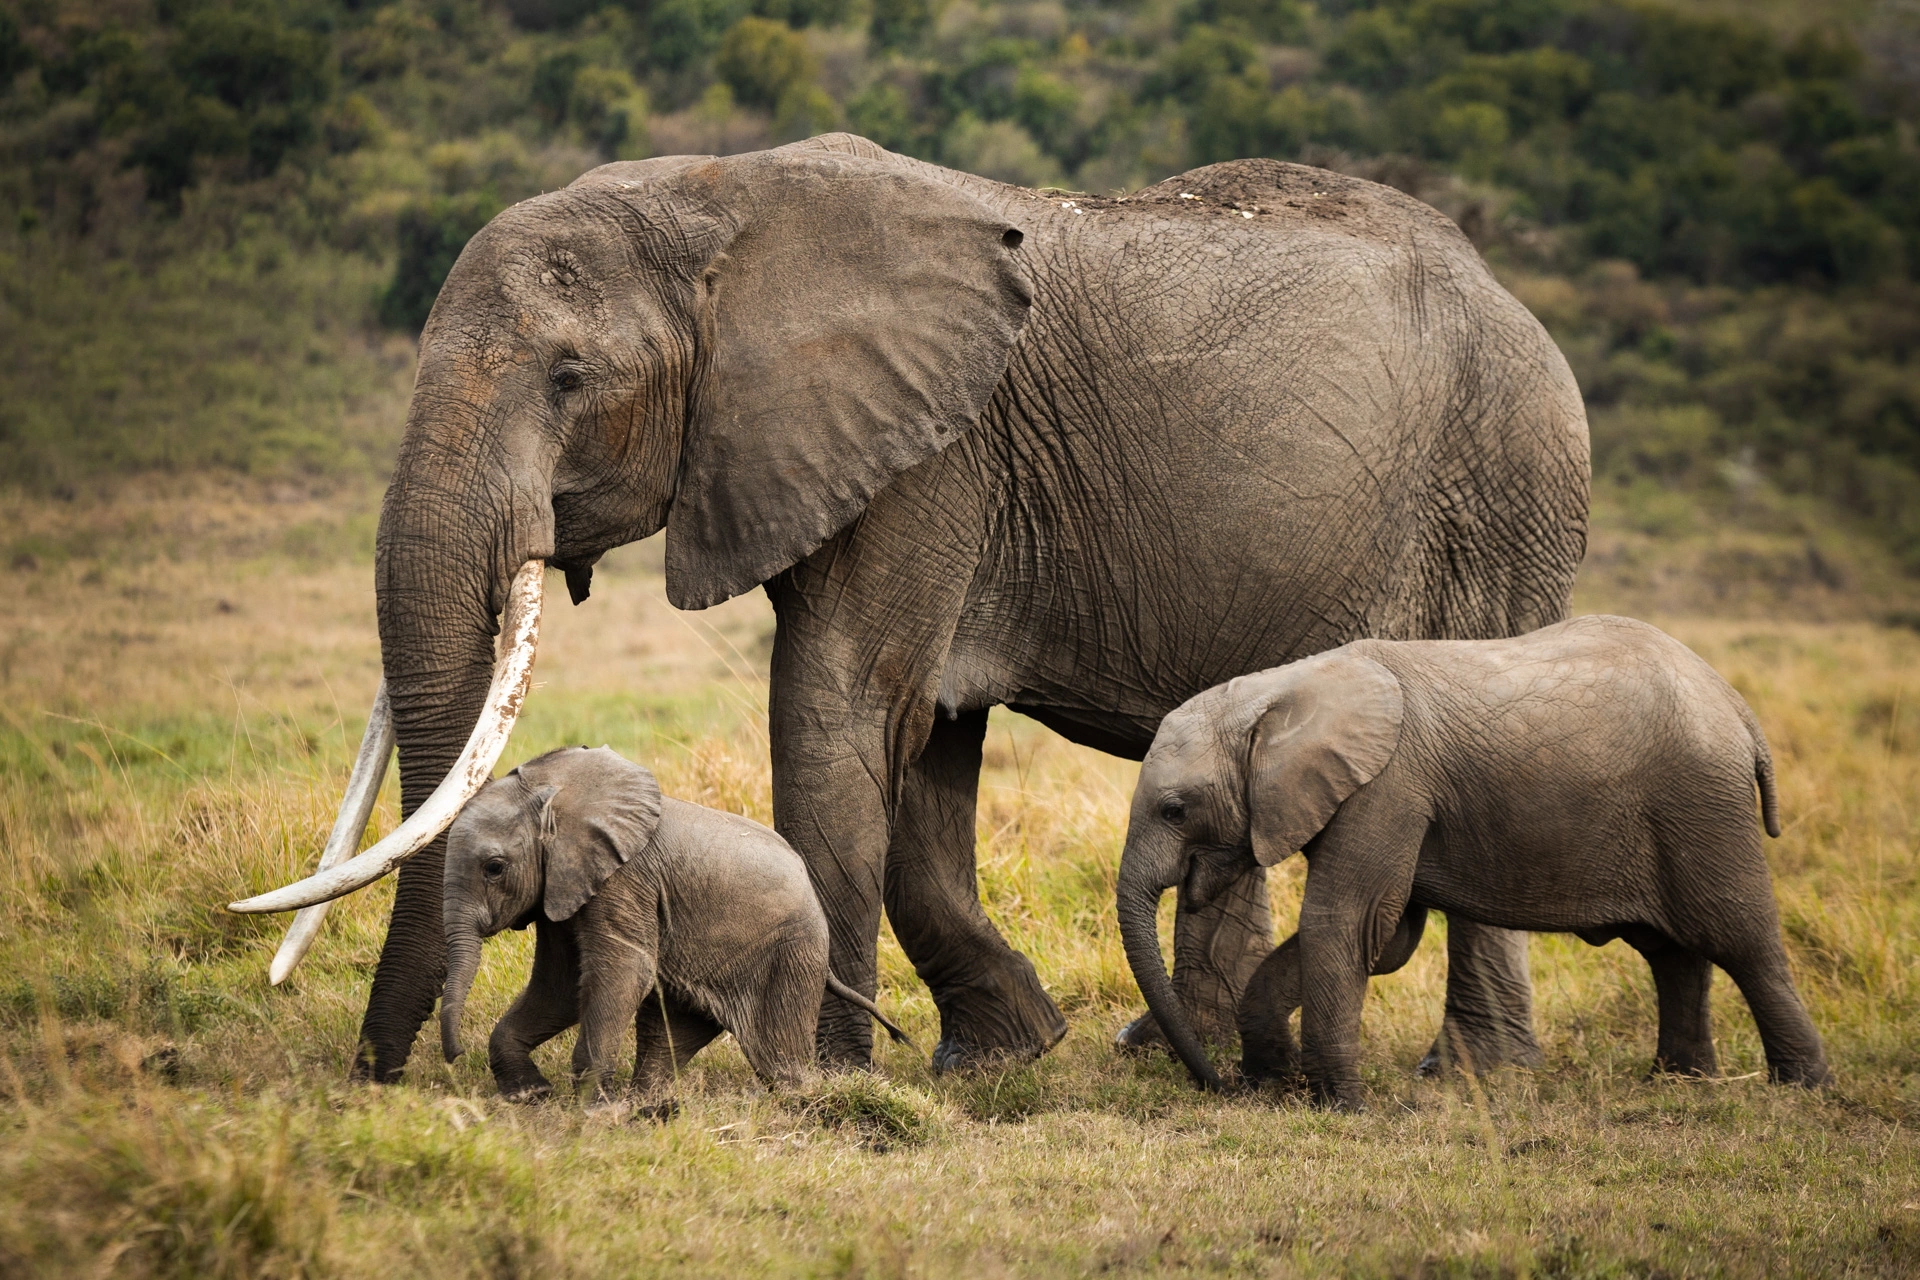 Family safari in Kenya - Elephants in Masai Mara National reserve